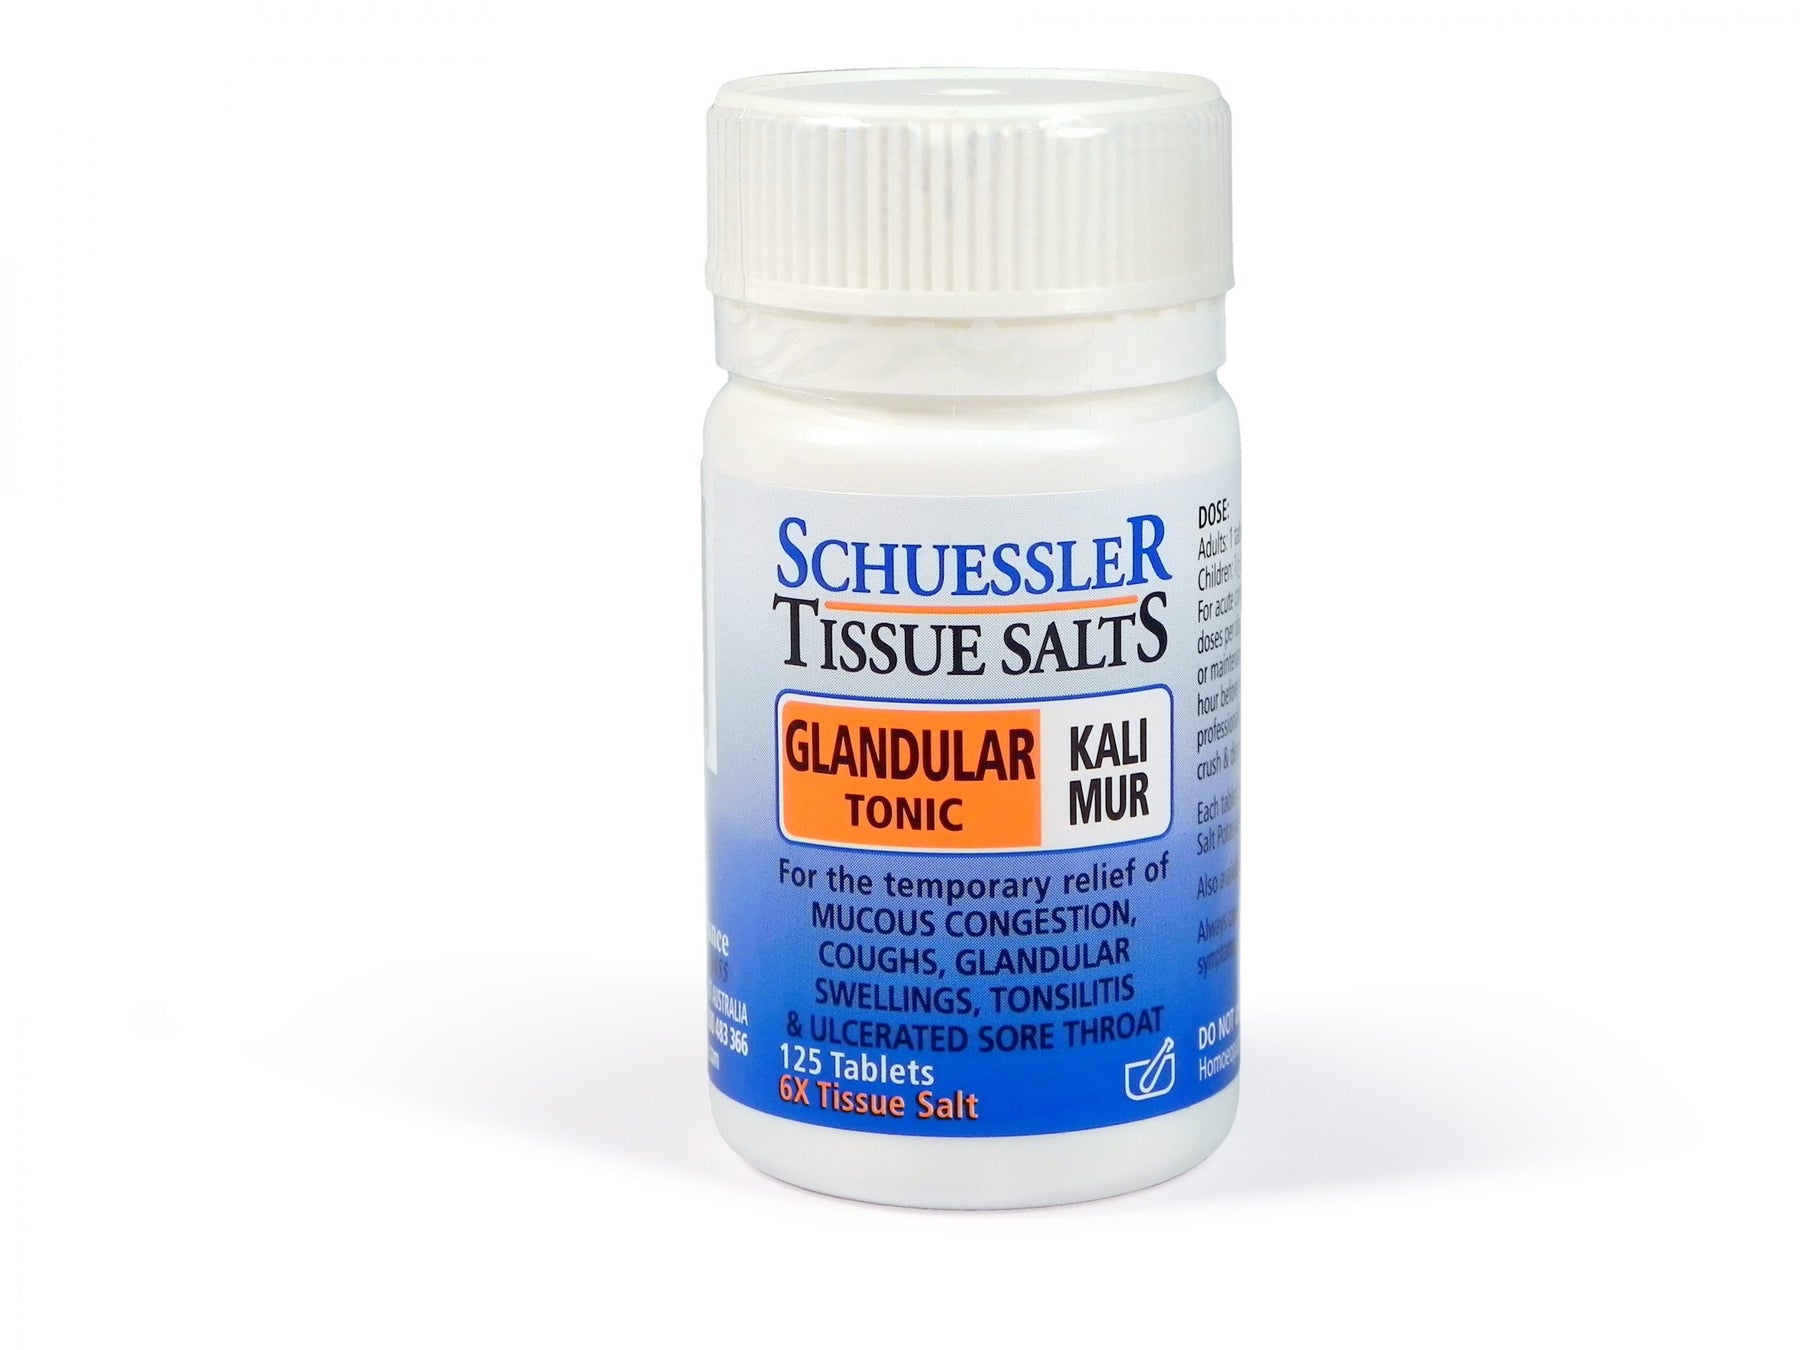 Schuessler Tissue Salts Glandular Tonic Kali Mur 5